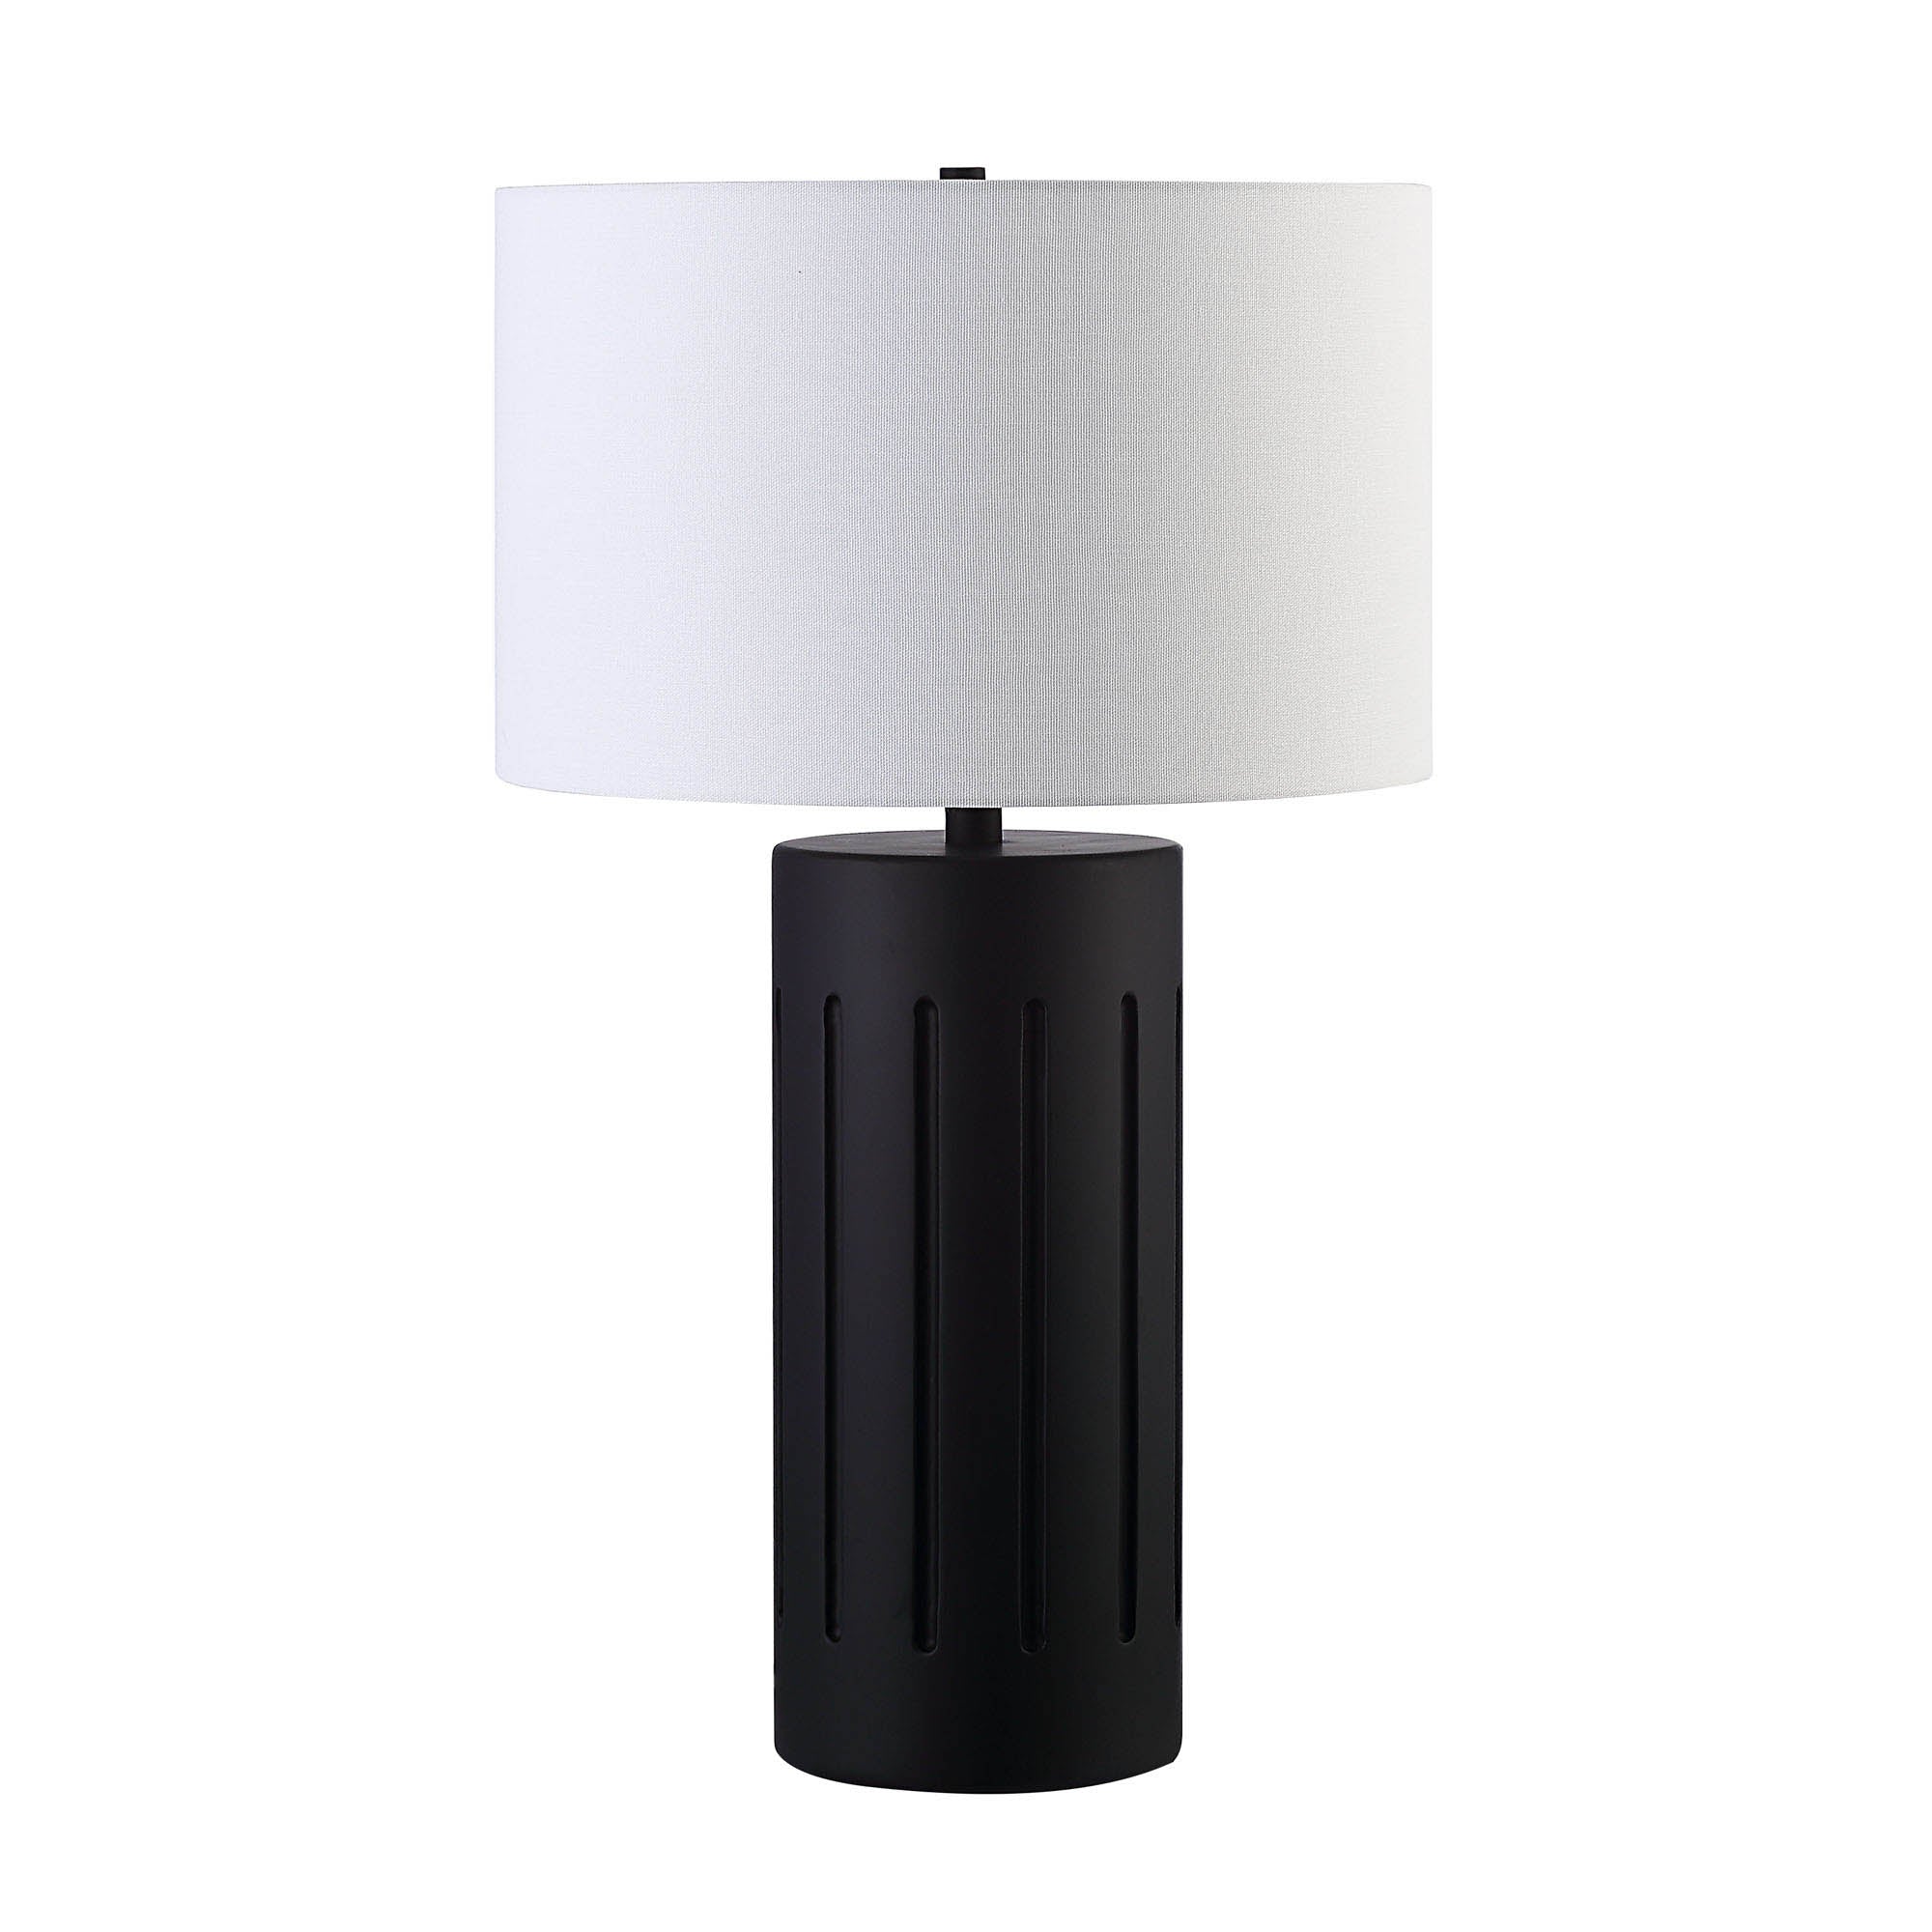 Renwil - JANNU Table Lamp - LPT1249 - Black